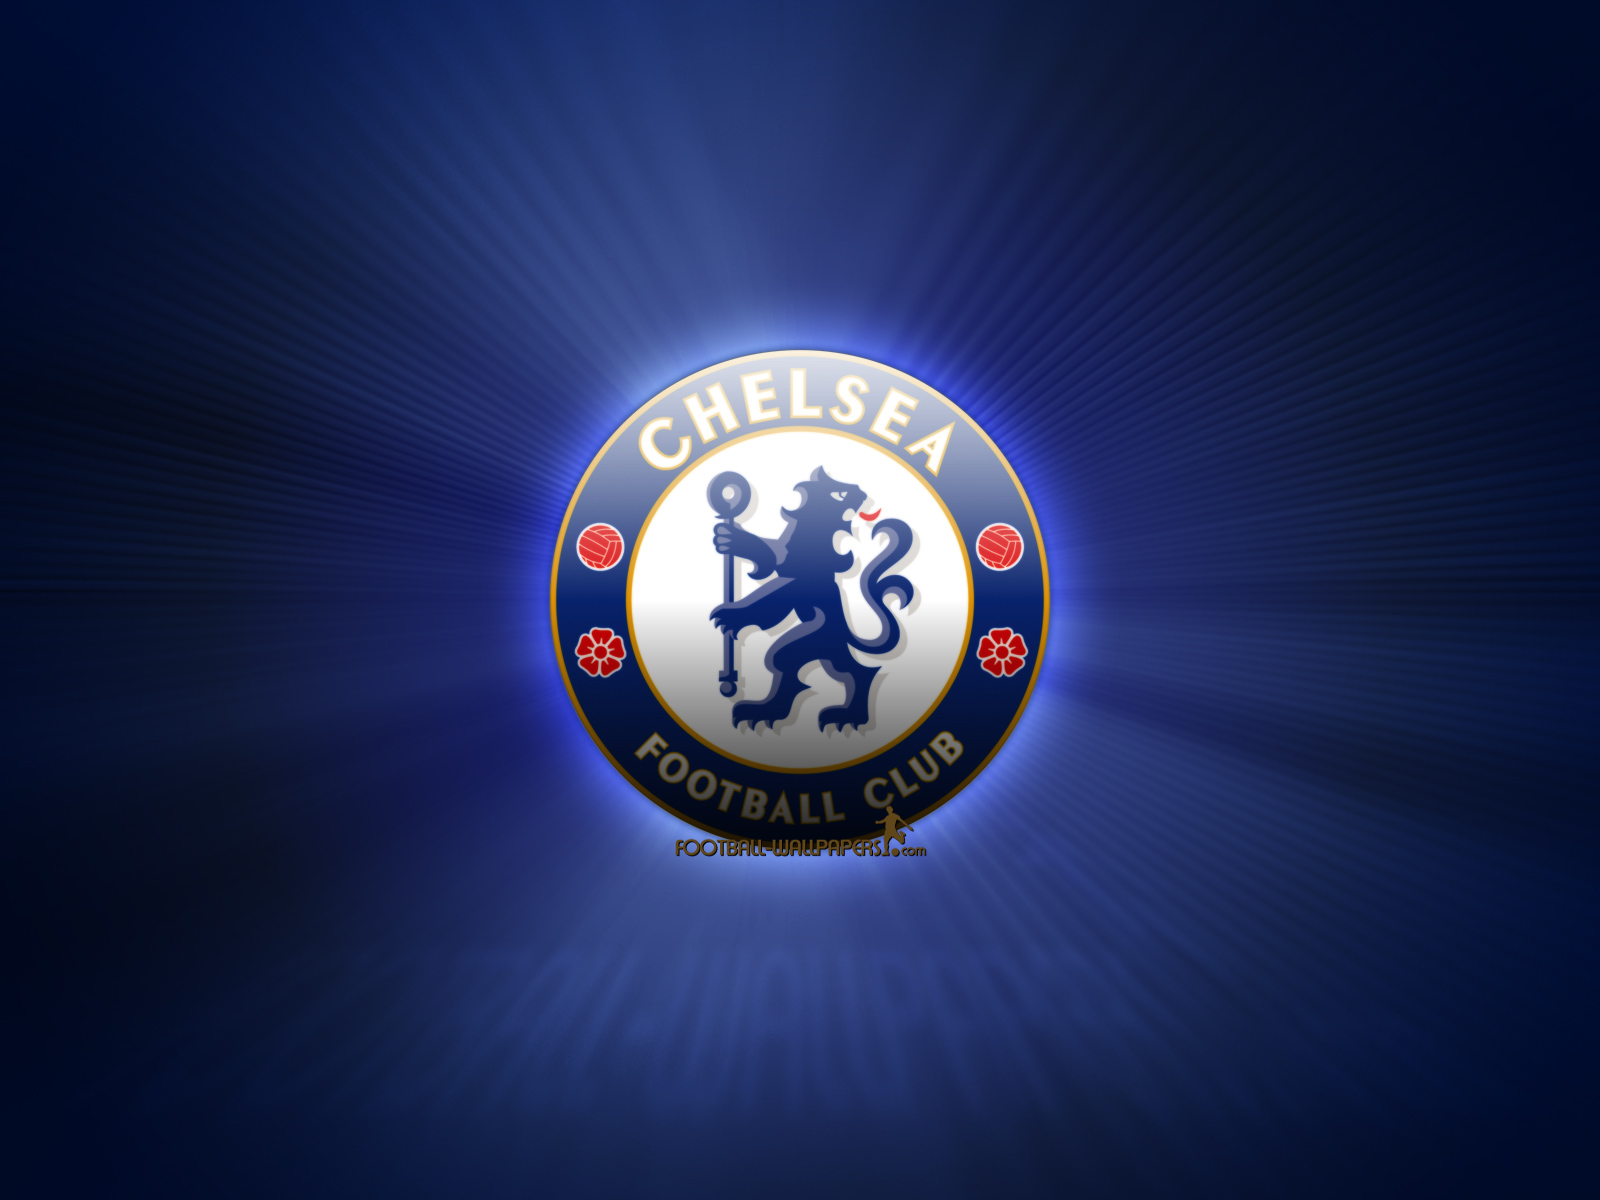 Chelsea Football Club Wallpaper Jpg